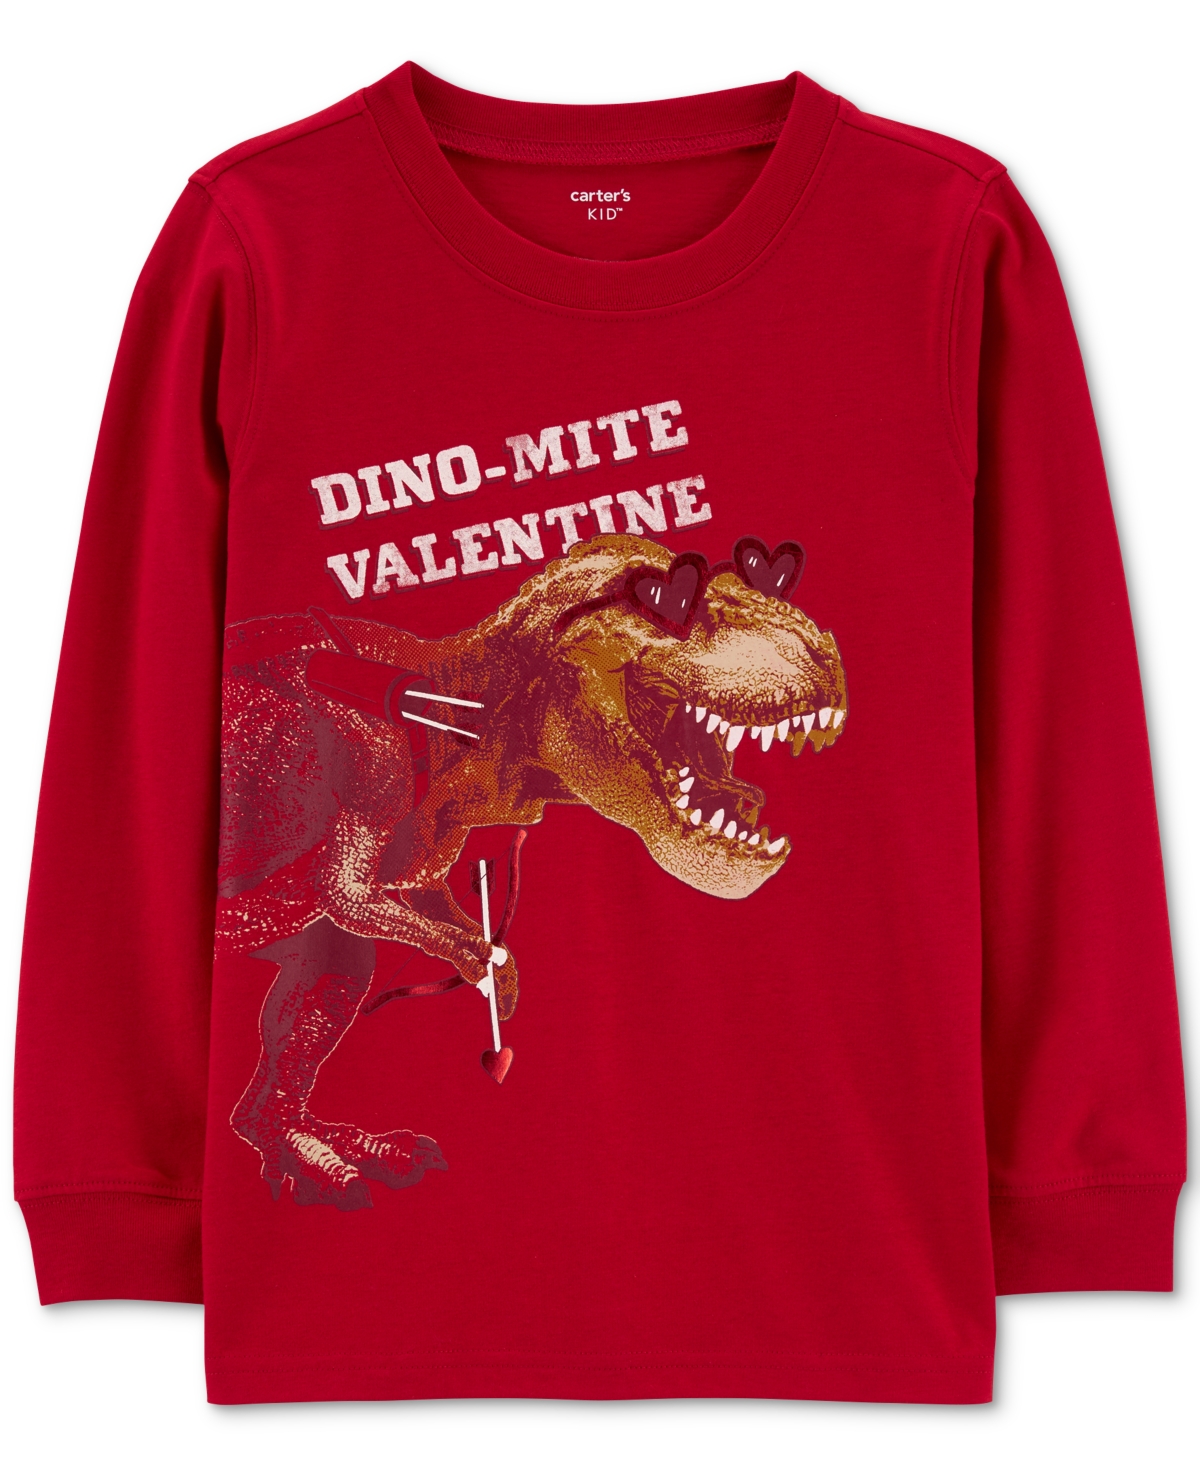 Carter's Kids' Big Boys Dino-mite Valentine Graphic T-shirt In Red